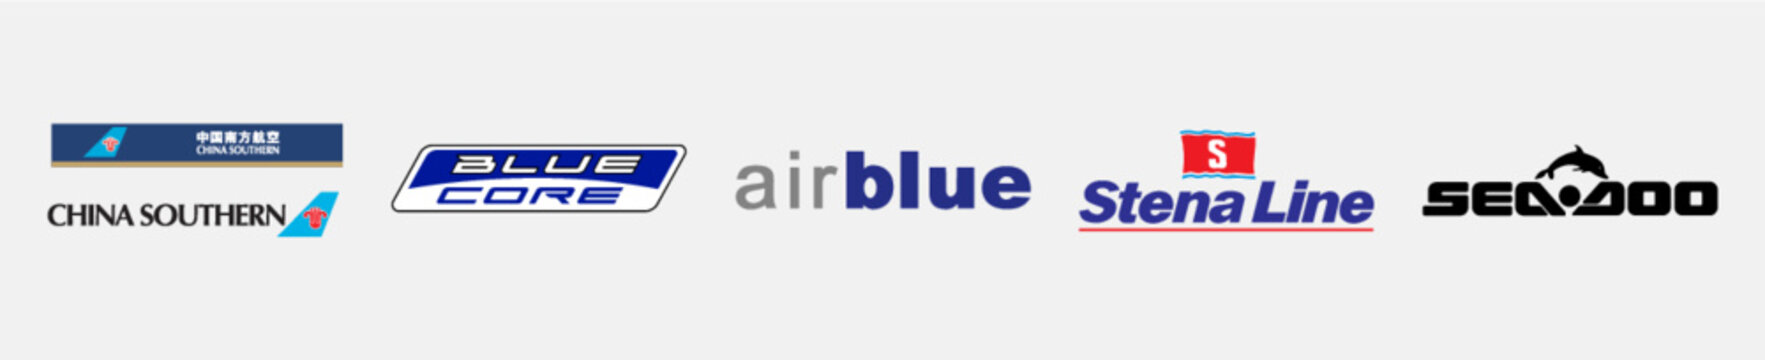 Air Blue logo, Stena Line logo, Sea Doo logo, China Southern Airlines logo, bluecore logo, Transport logo Bundle, Set of popular logos printed on paper.